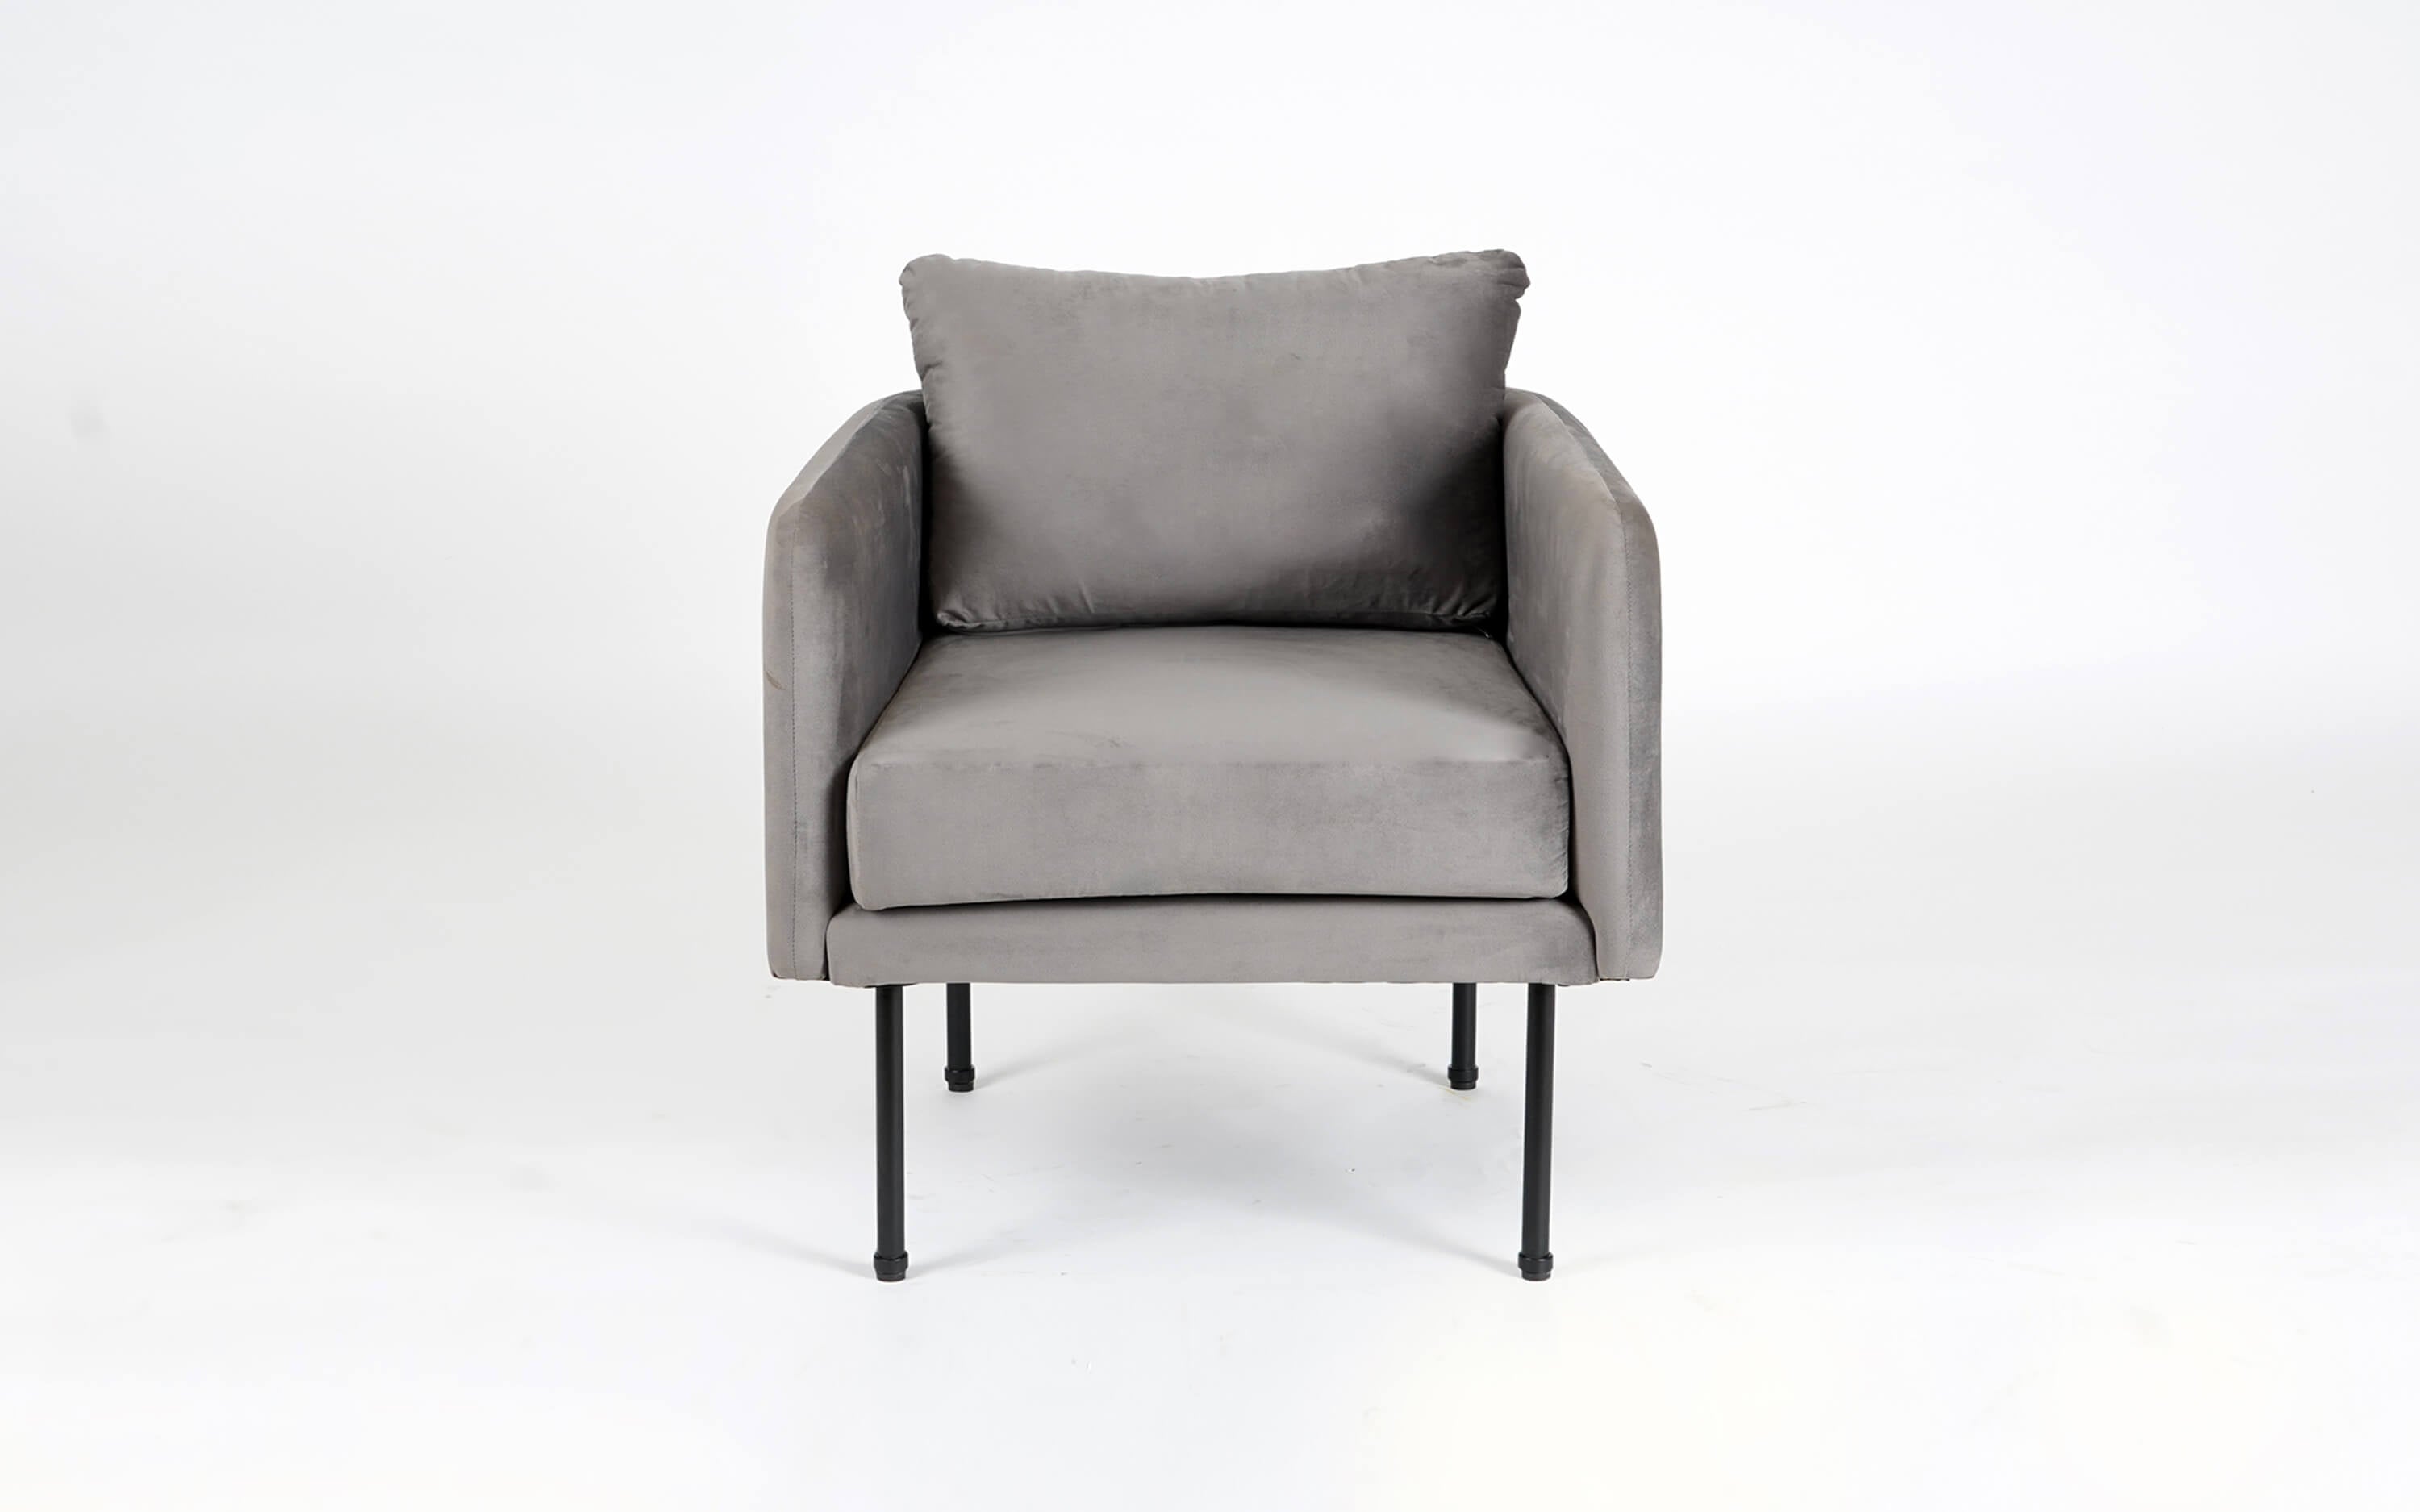 Premium Quality Lounge Chair - Orange Tree Home Pvt. Ltd.